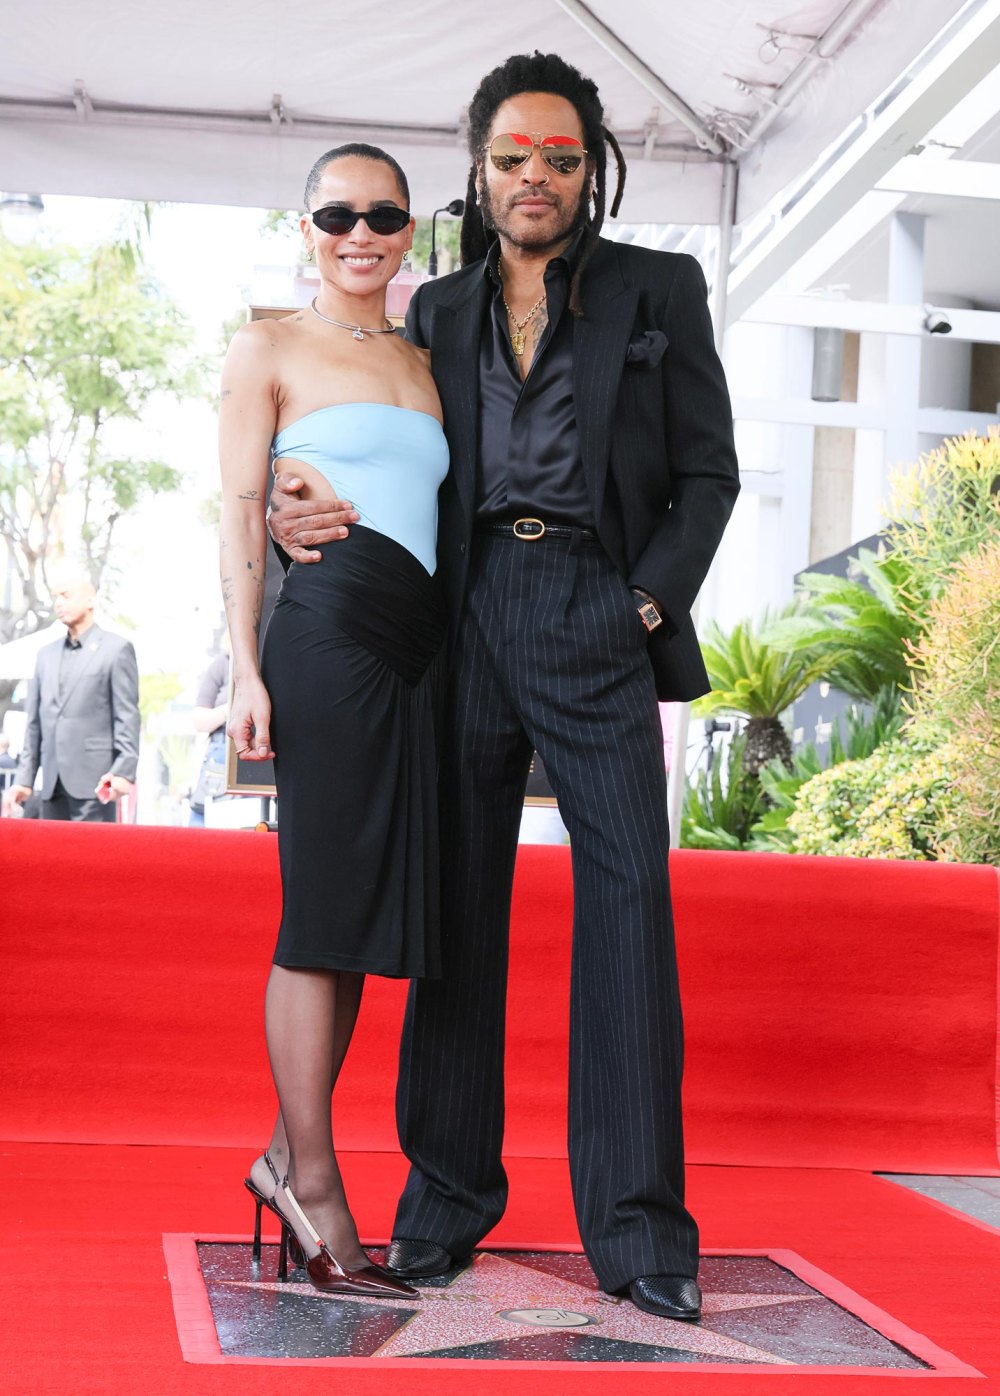 Zoe Kravitz Hilariously Roasts Dad Lenny Kravitz s Fashion Choices at His Walk of Fame Ceremony 967